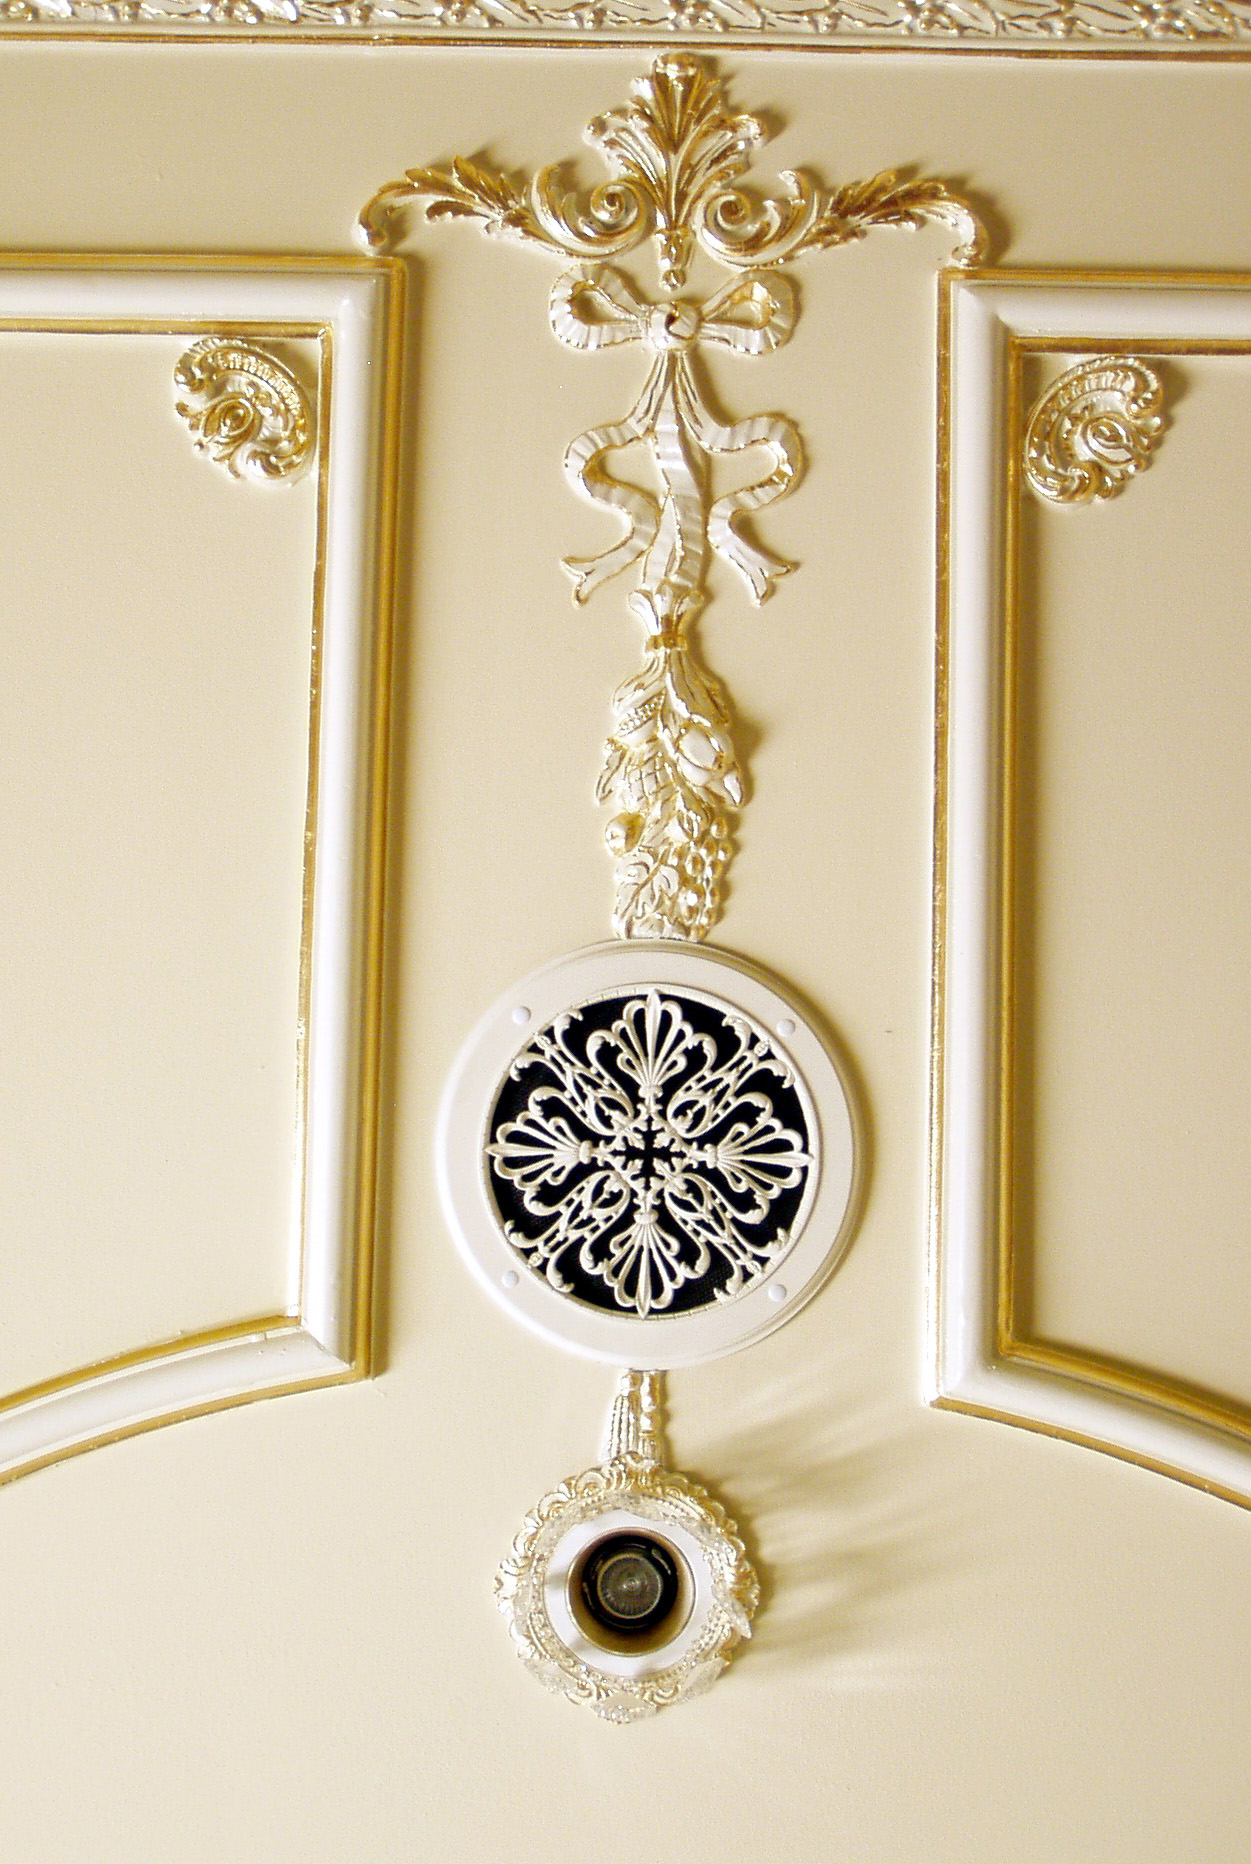 Speaker Grille and Decorative recessed light trim in this classical ceiling design.